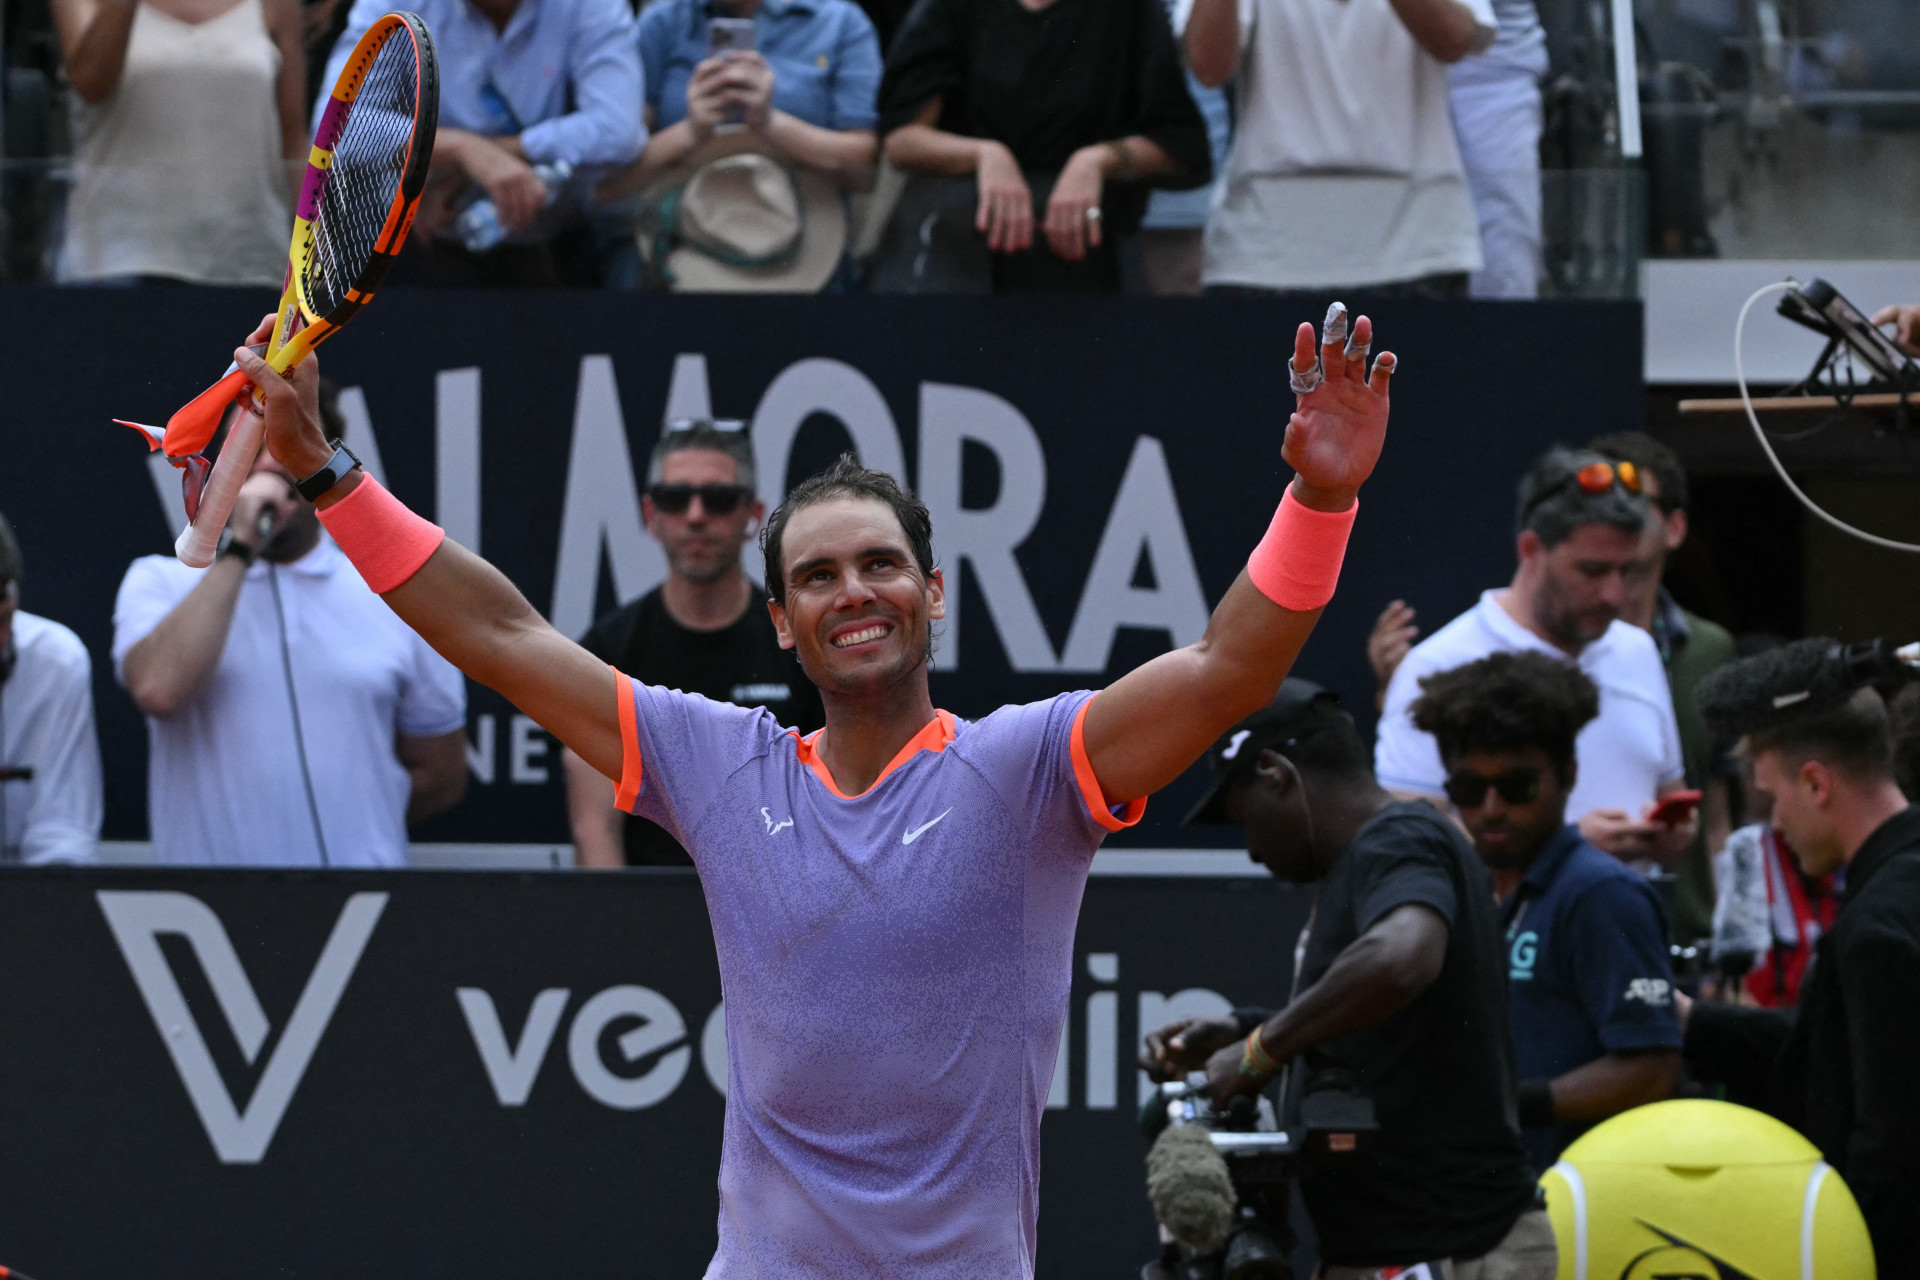 Rafael Nadal comemora vitória no Masters 1000 de Roma (Foto: Andreas SOLARO / AFP)